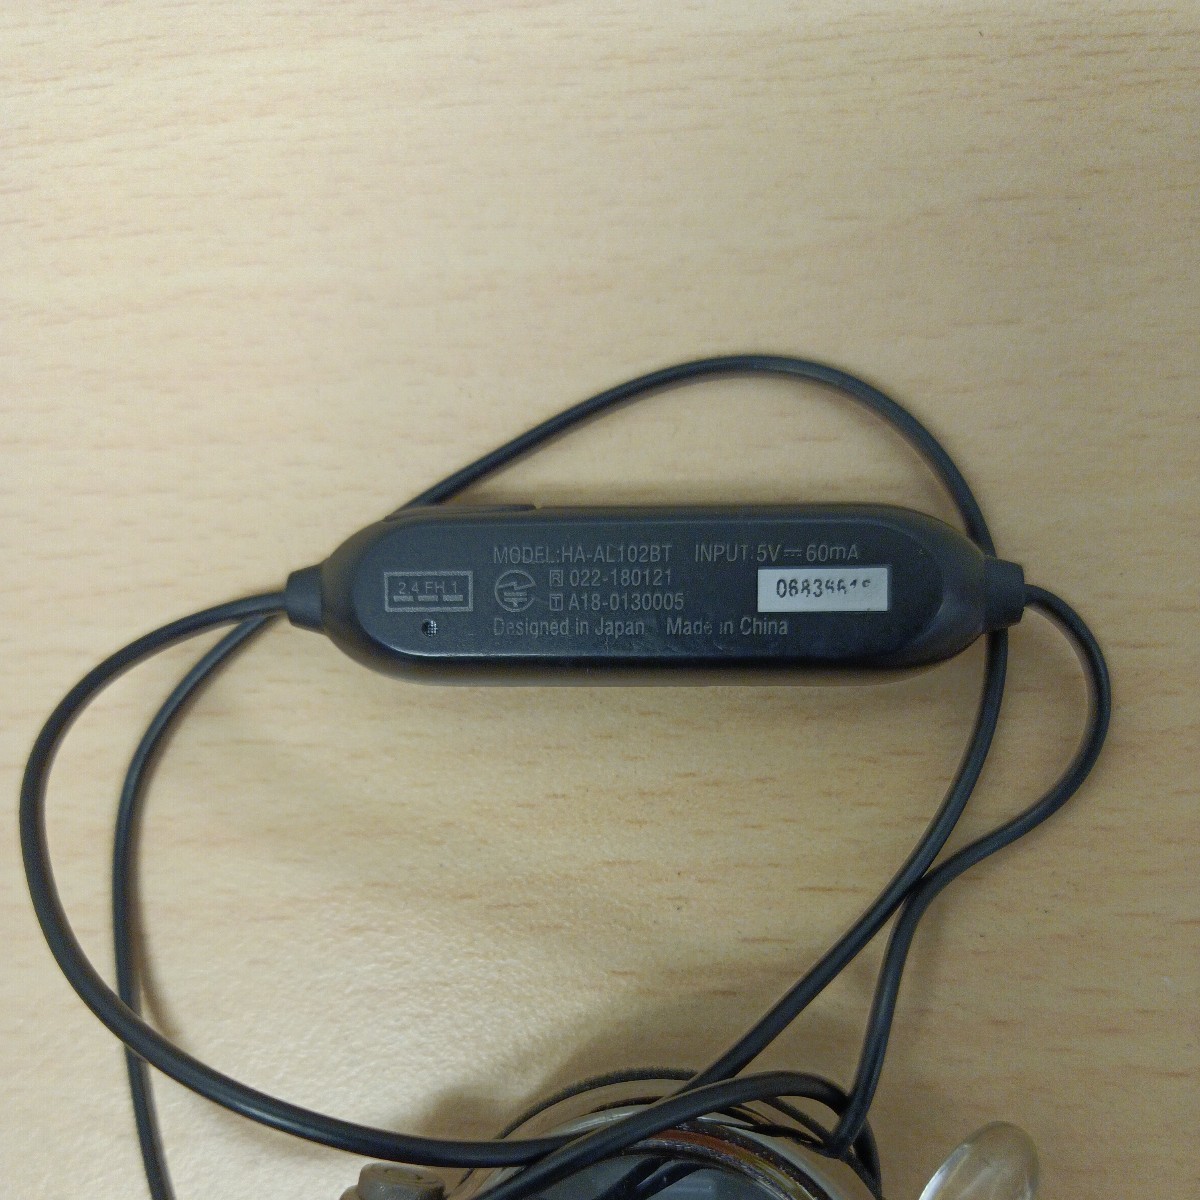 y020709fk JVCケンウッド JVC HA-AL102BT ワイヤレスイヤホン 耳掛け式/Bluetooth ブラック HA-AL102BT-B_画像4